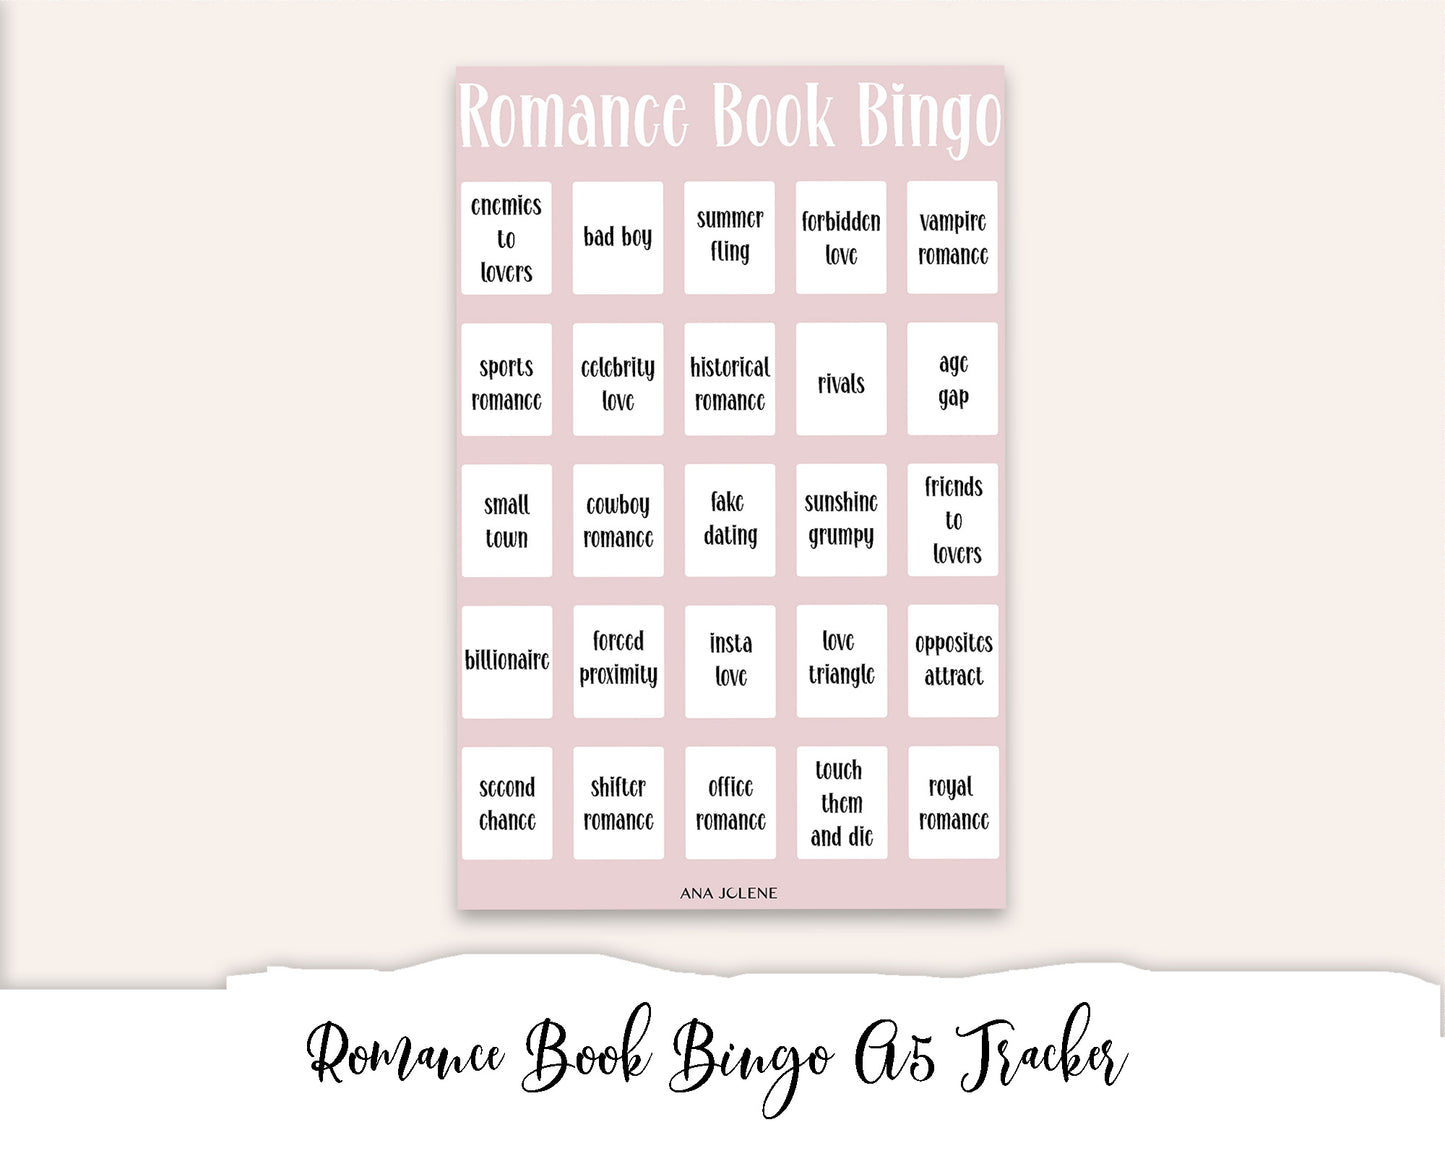 Romance Book Bingo Tracker Full Page Sticker - A5 Reading Journal